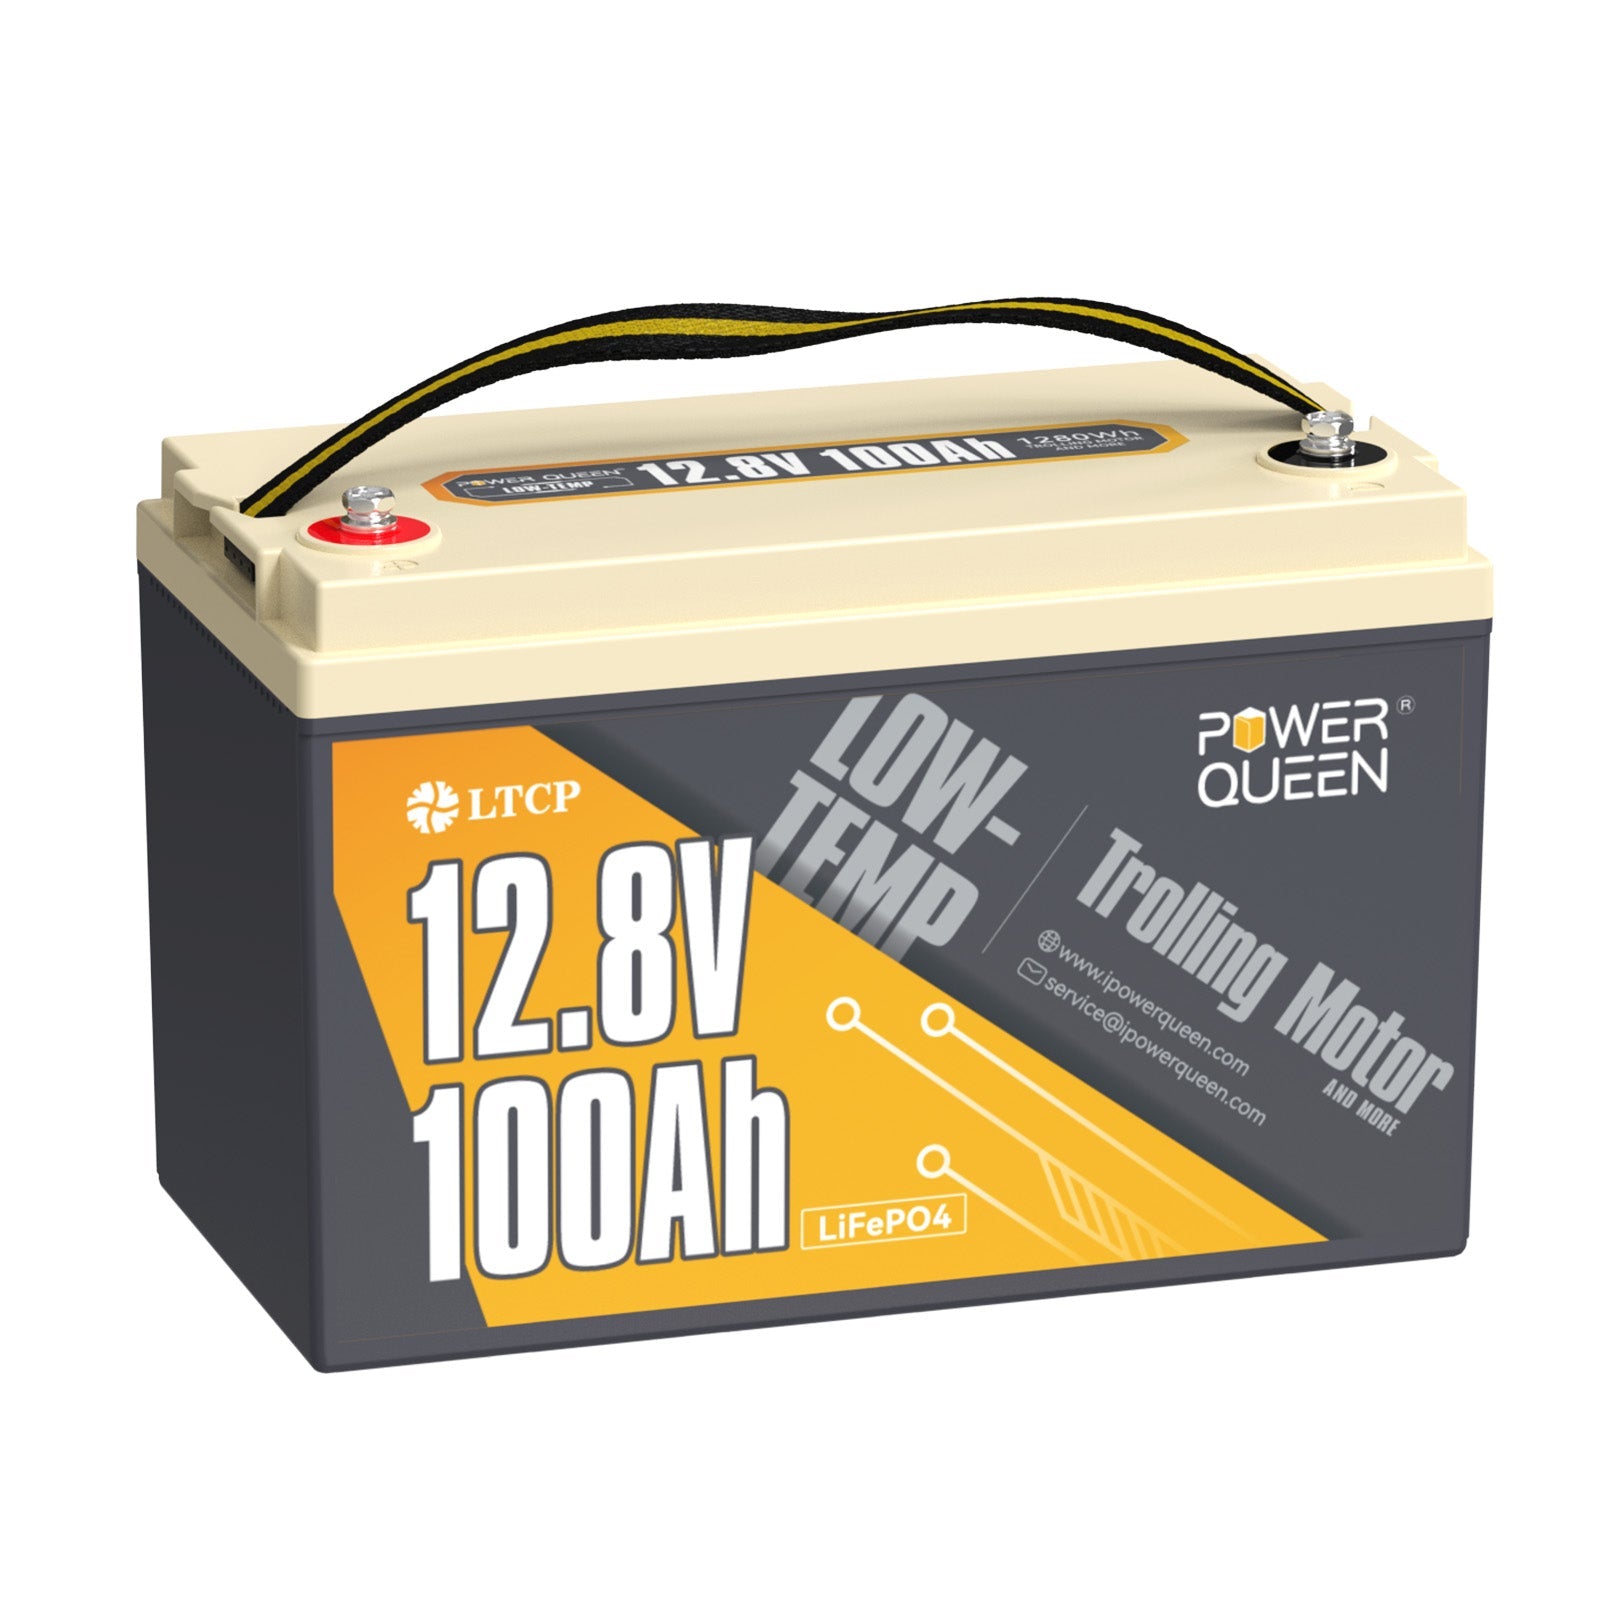 【0% IVA】Batería LiFePO4 de baja temperatura Power Queen de 12,8 V y 100 Ah, BMS de 100 A para motor de pesca por curricán